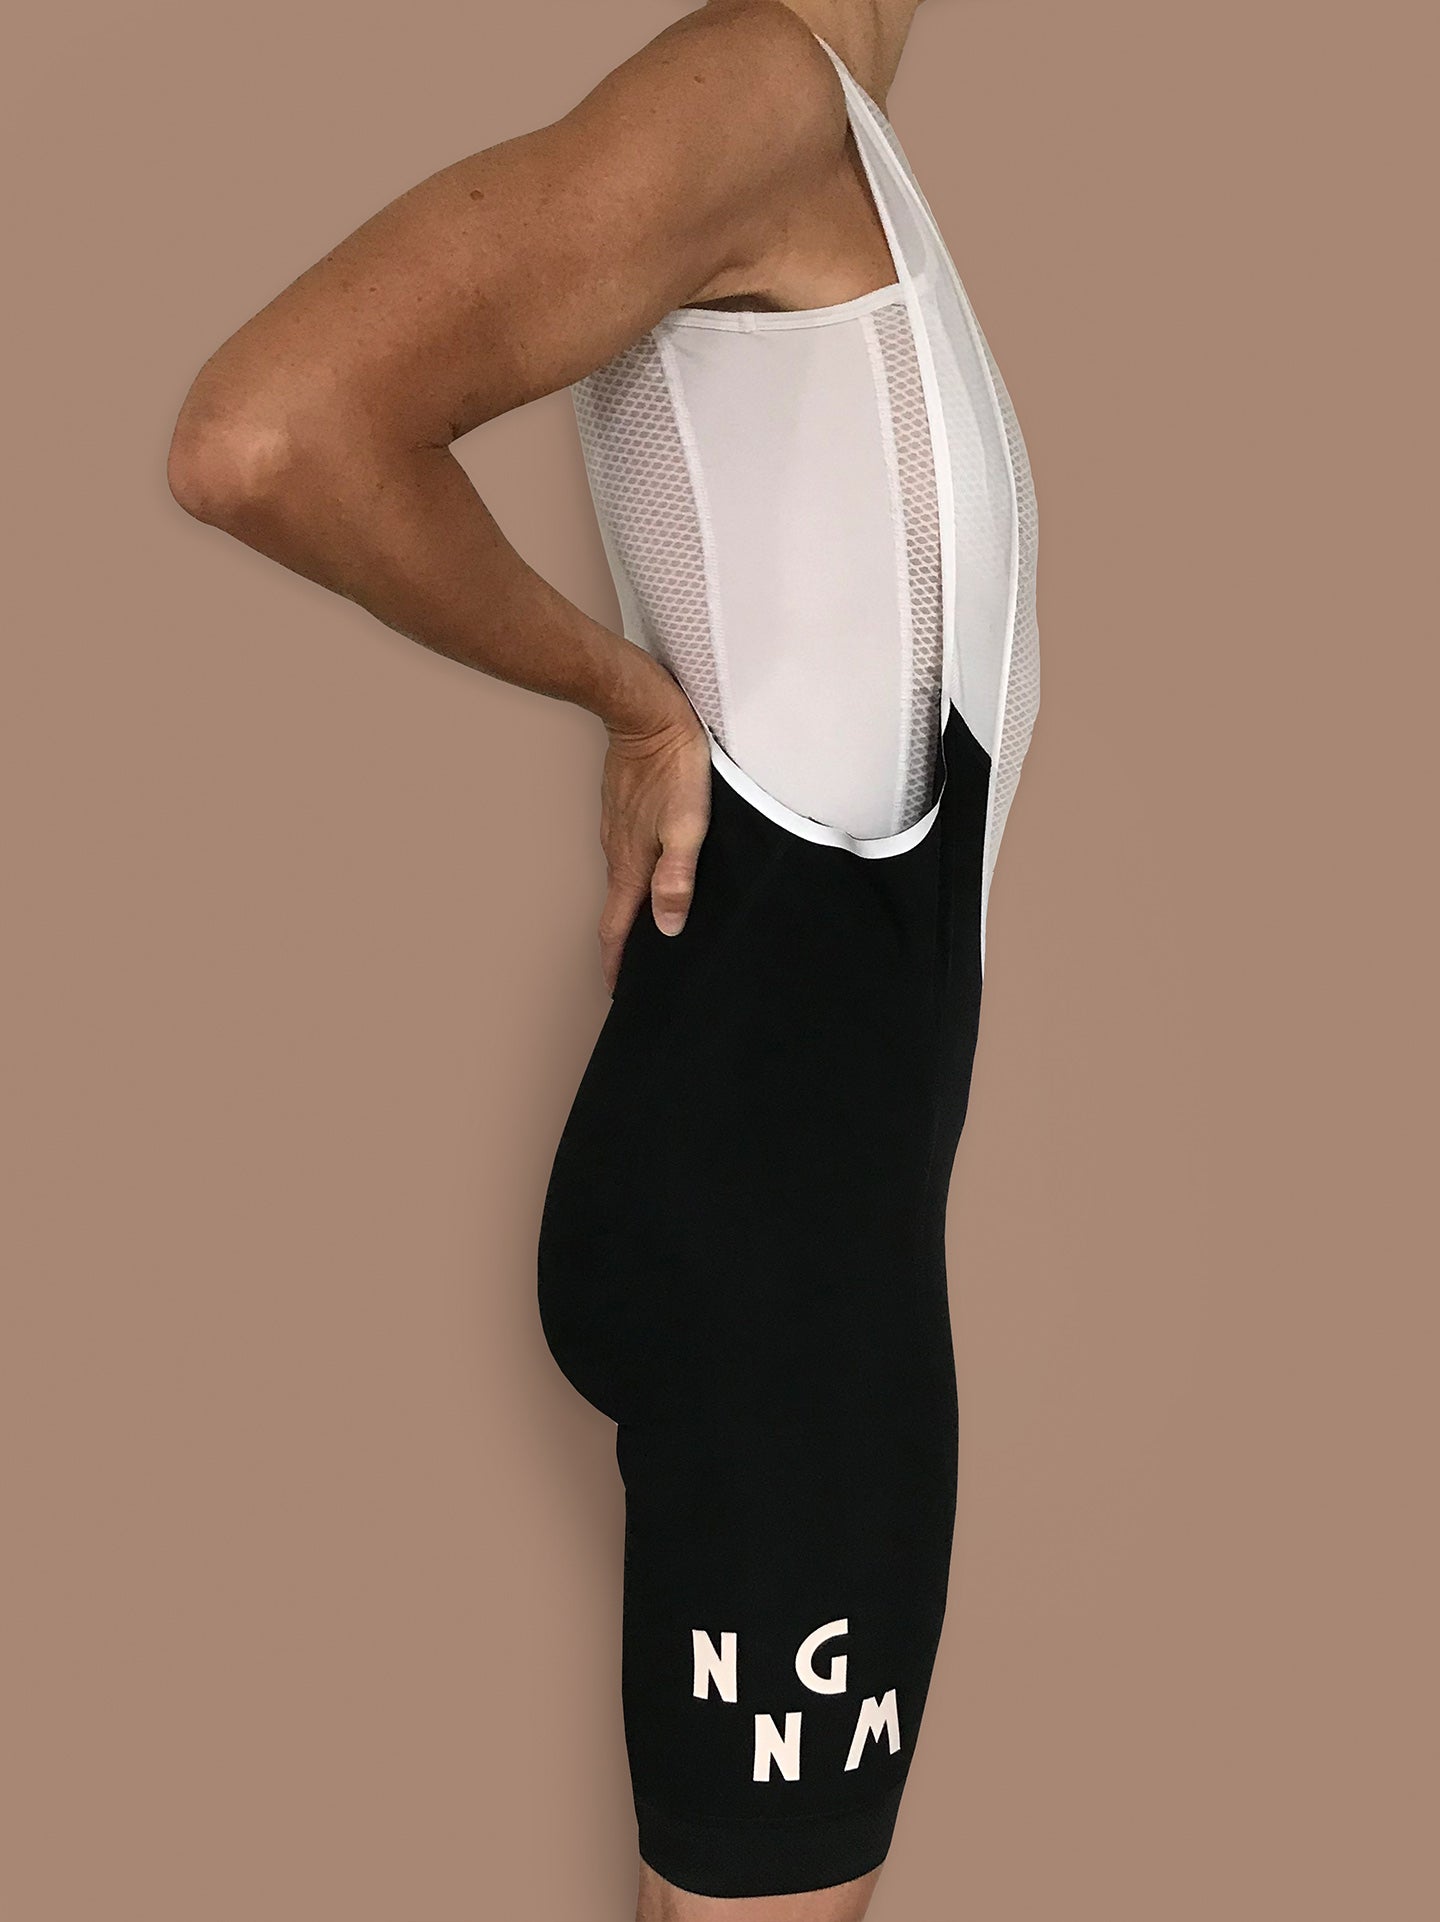 NGNM Winter Performance Bib Shorts black Side